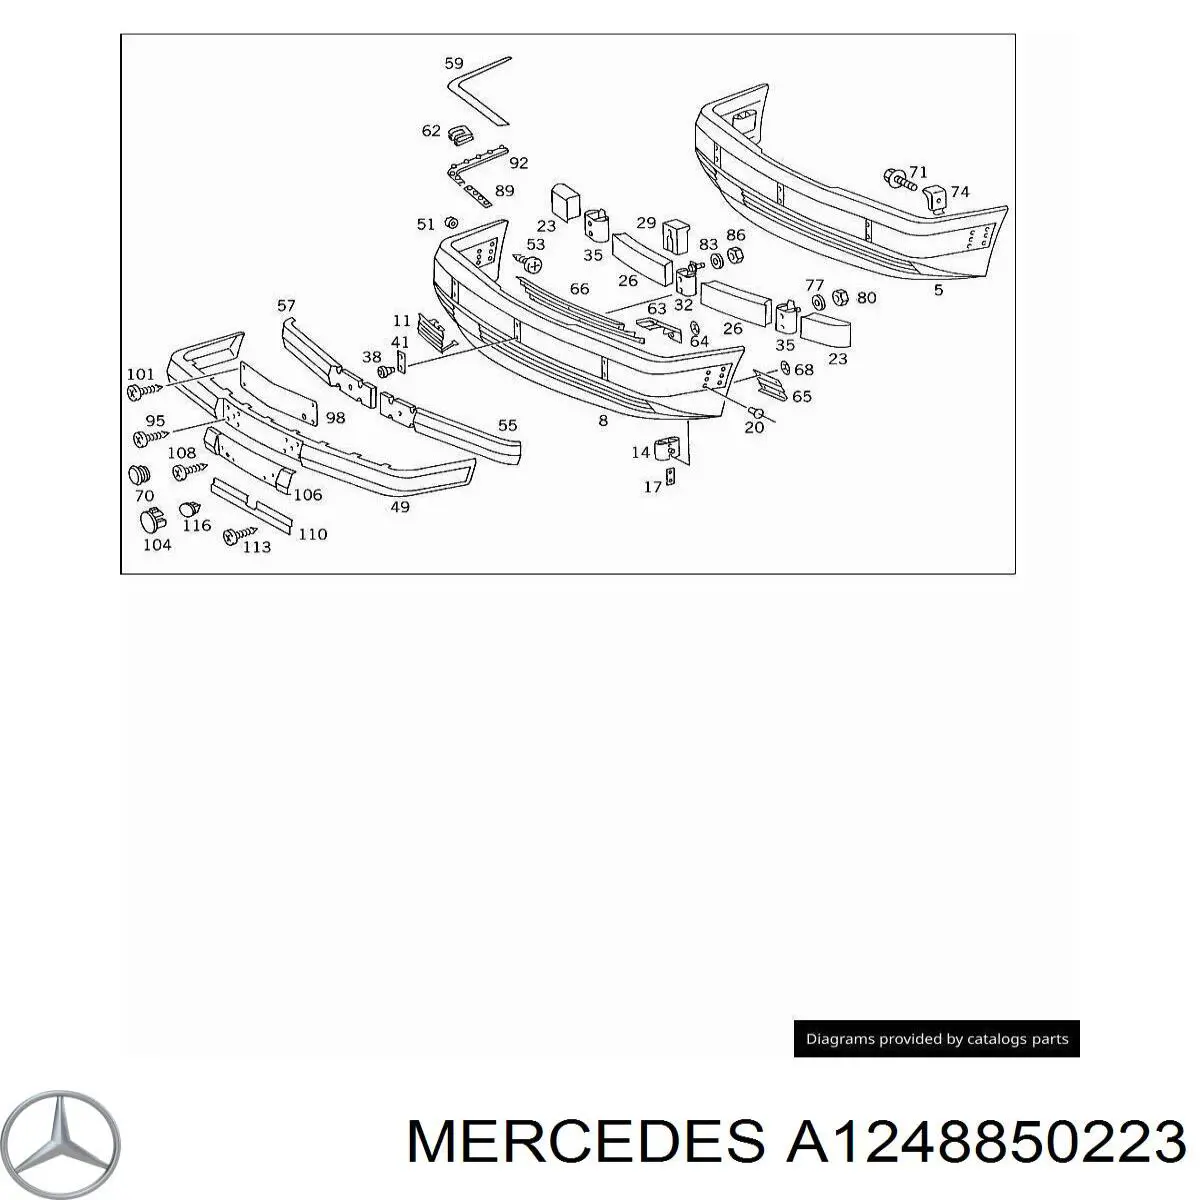 A1248850223 Mercedes